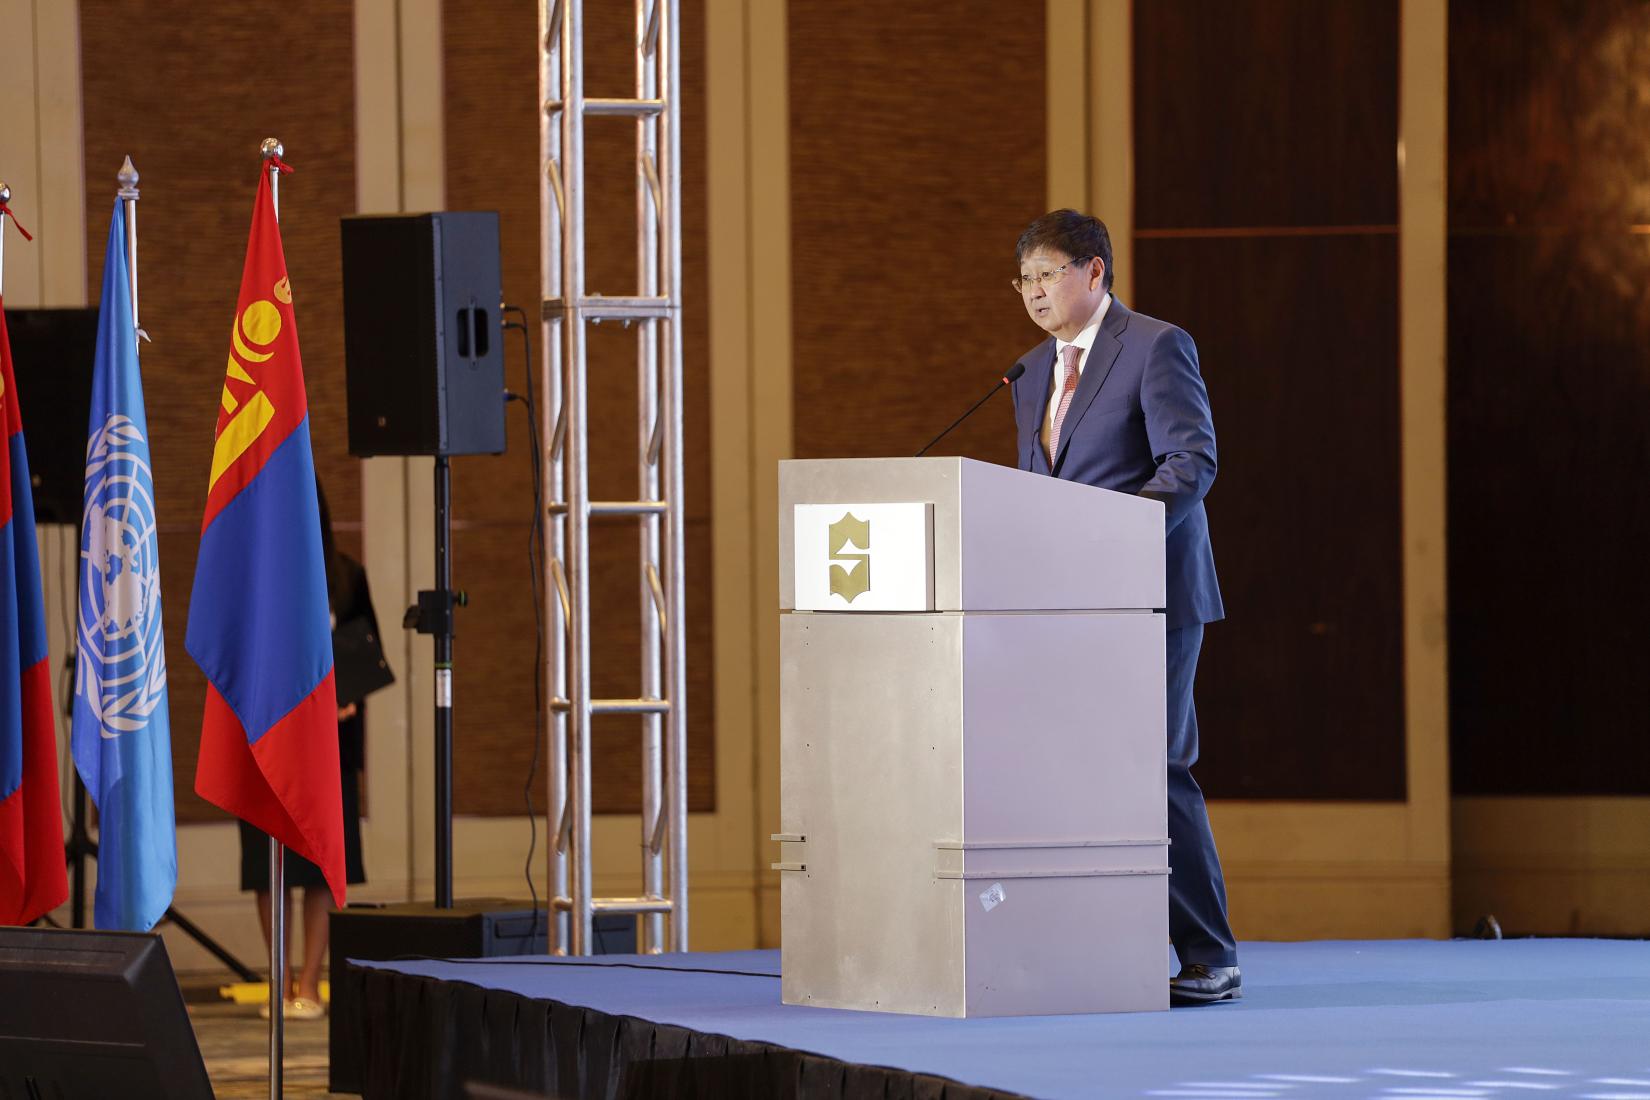 Deputy Minister of Mongolia Ch. Khurelbaatar